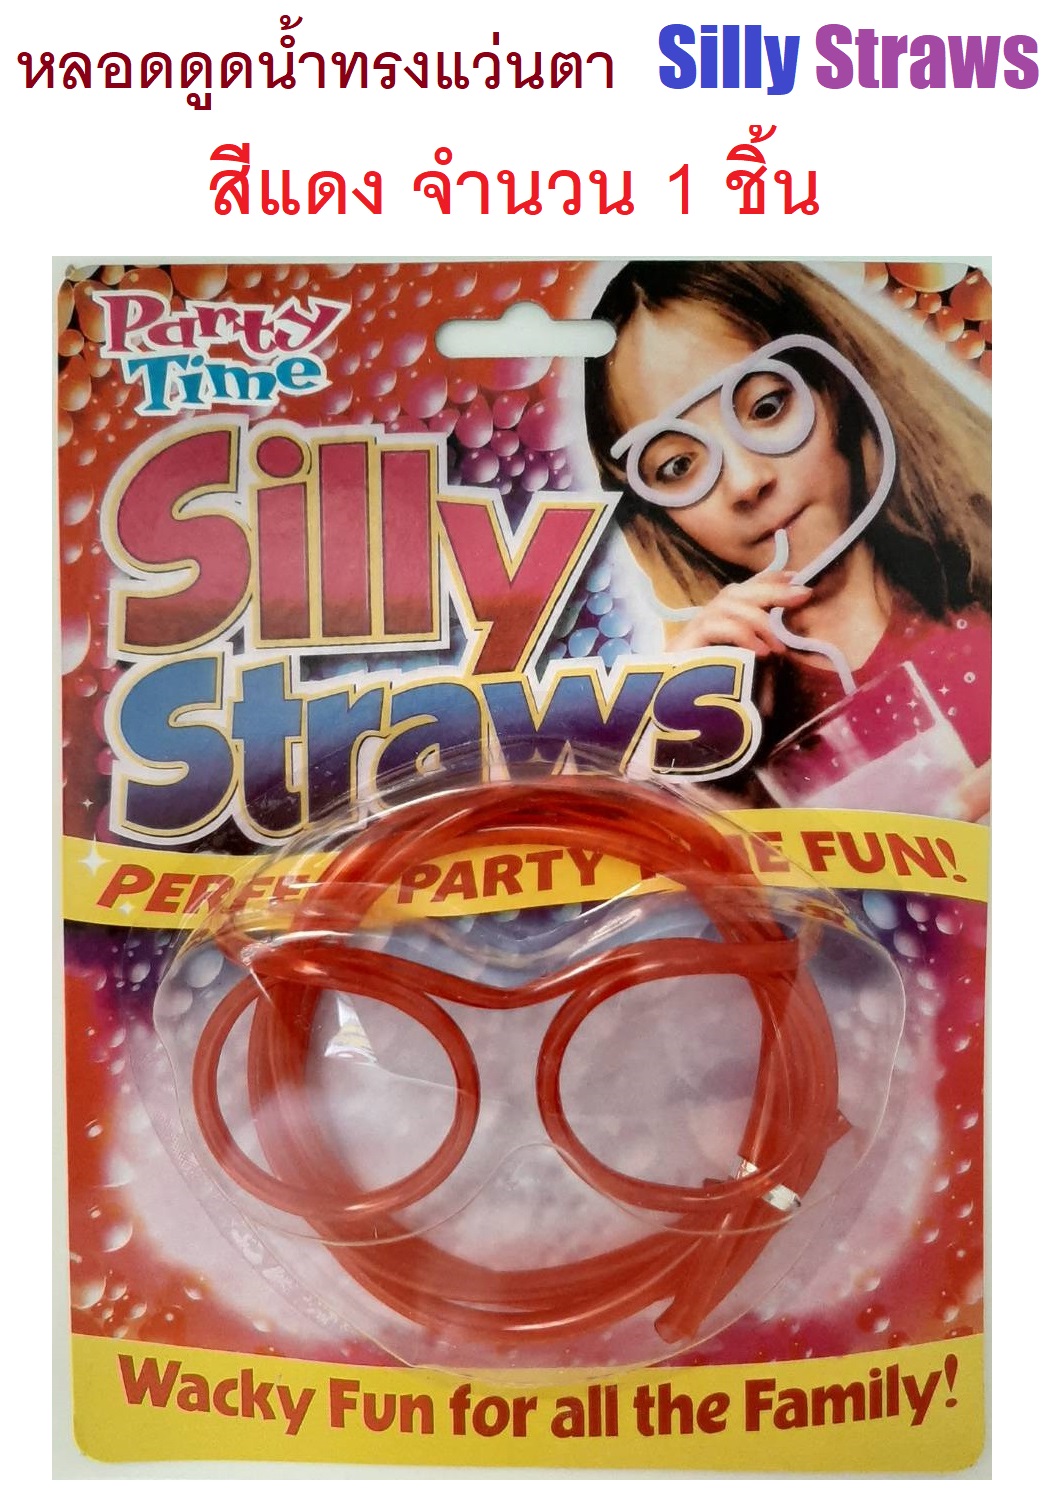 Wphuth หลอดดูดน้ำทรงแว่นตา Silly Straws สำหรับใช้เป็นอุปกรณ์ดูดน้ำในงานปาร์ตี้ งานสังสรรค์ต่าง ๆ สีแดง จำนวน 1 ชิ้น